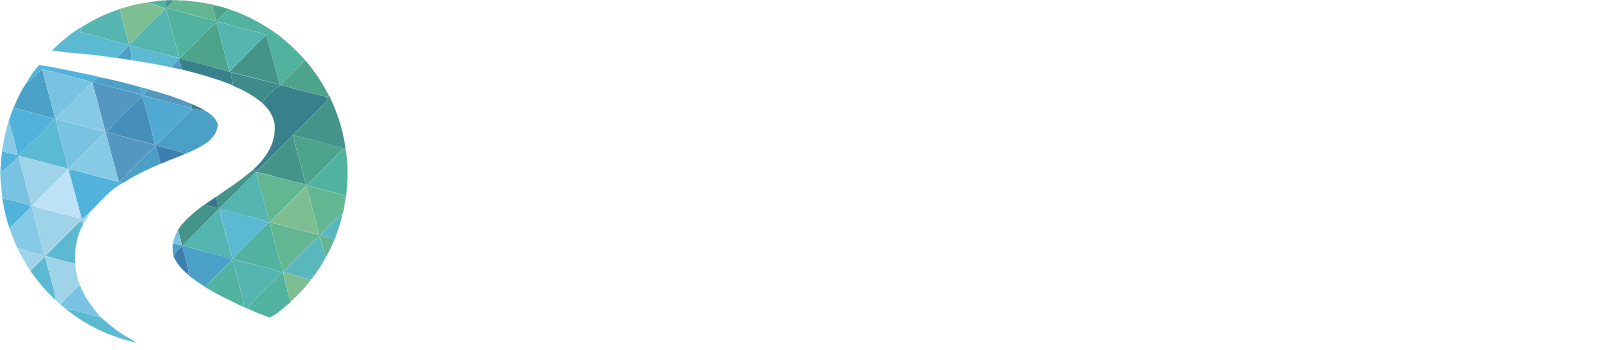 Travere Therapeutics Logo groß für dunkle Hintergründe (transparentes PNG)